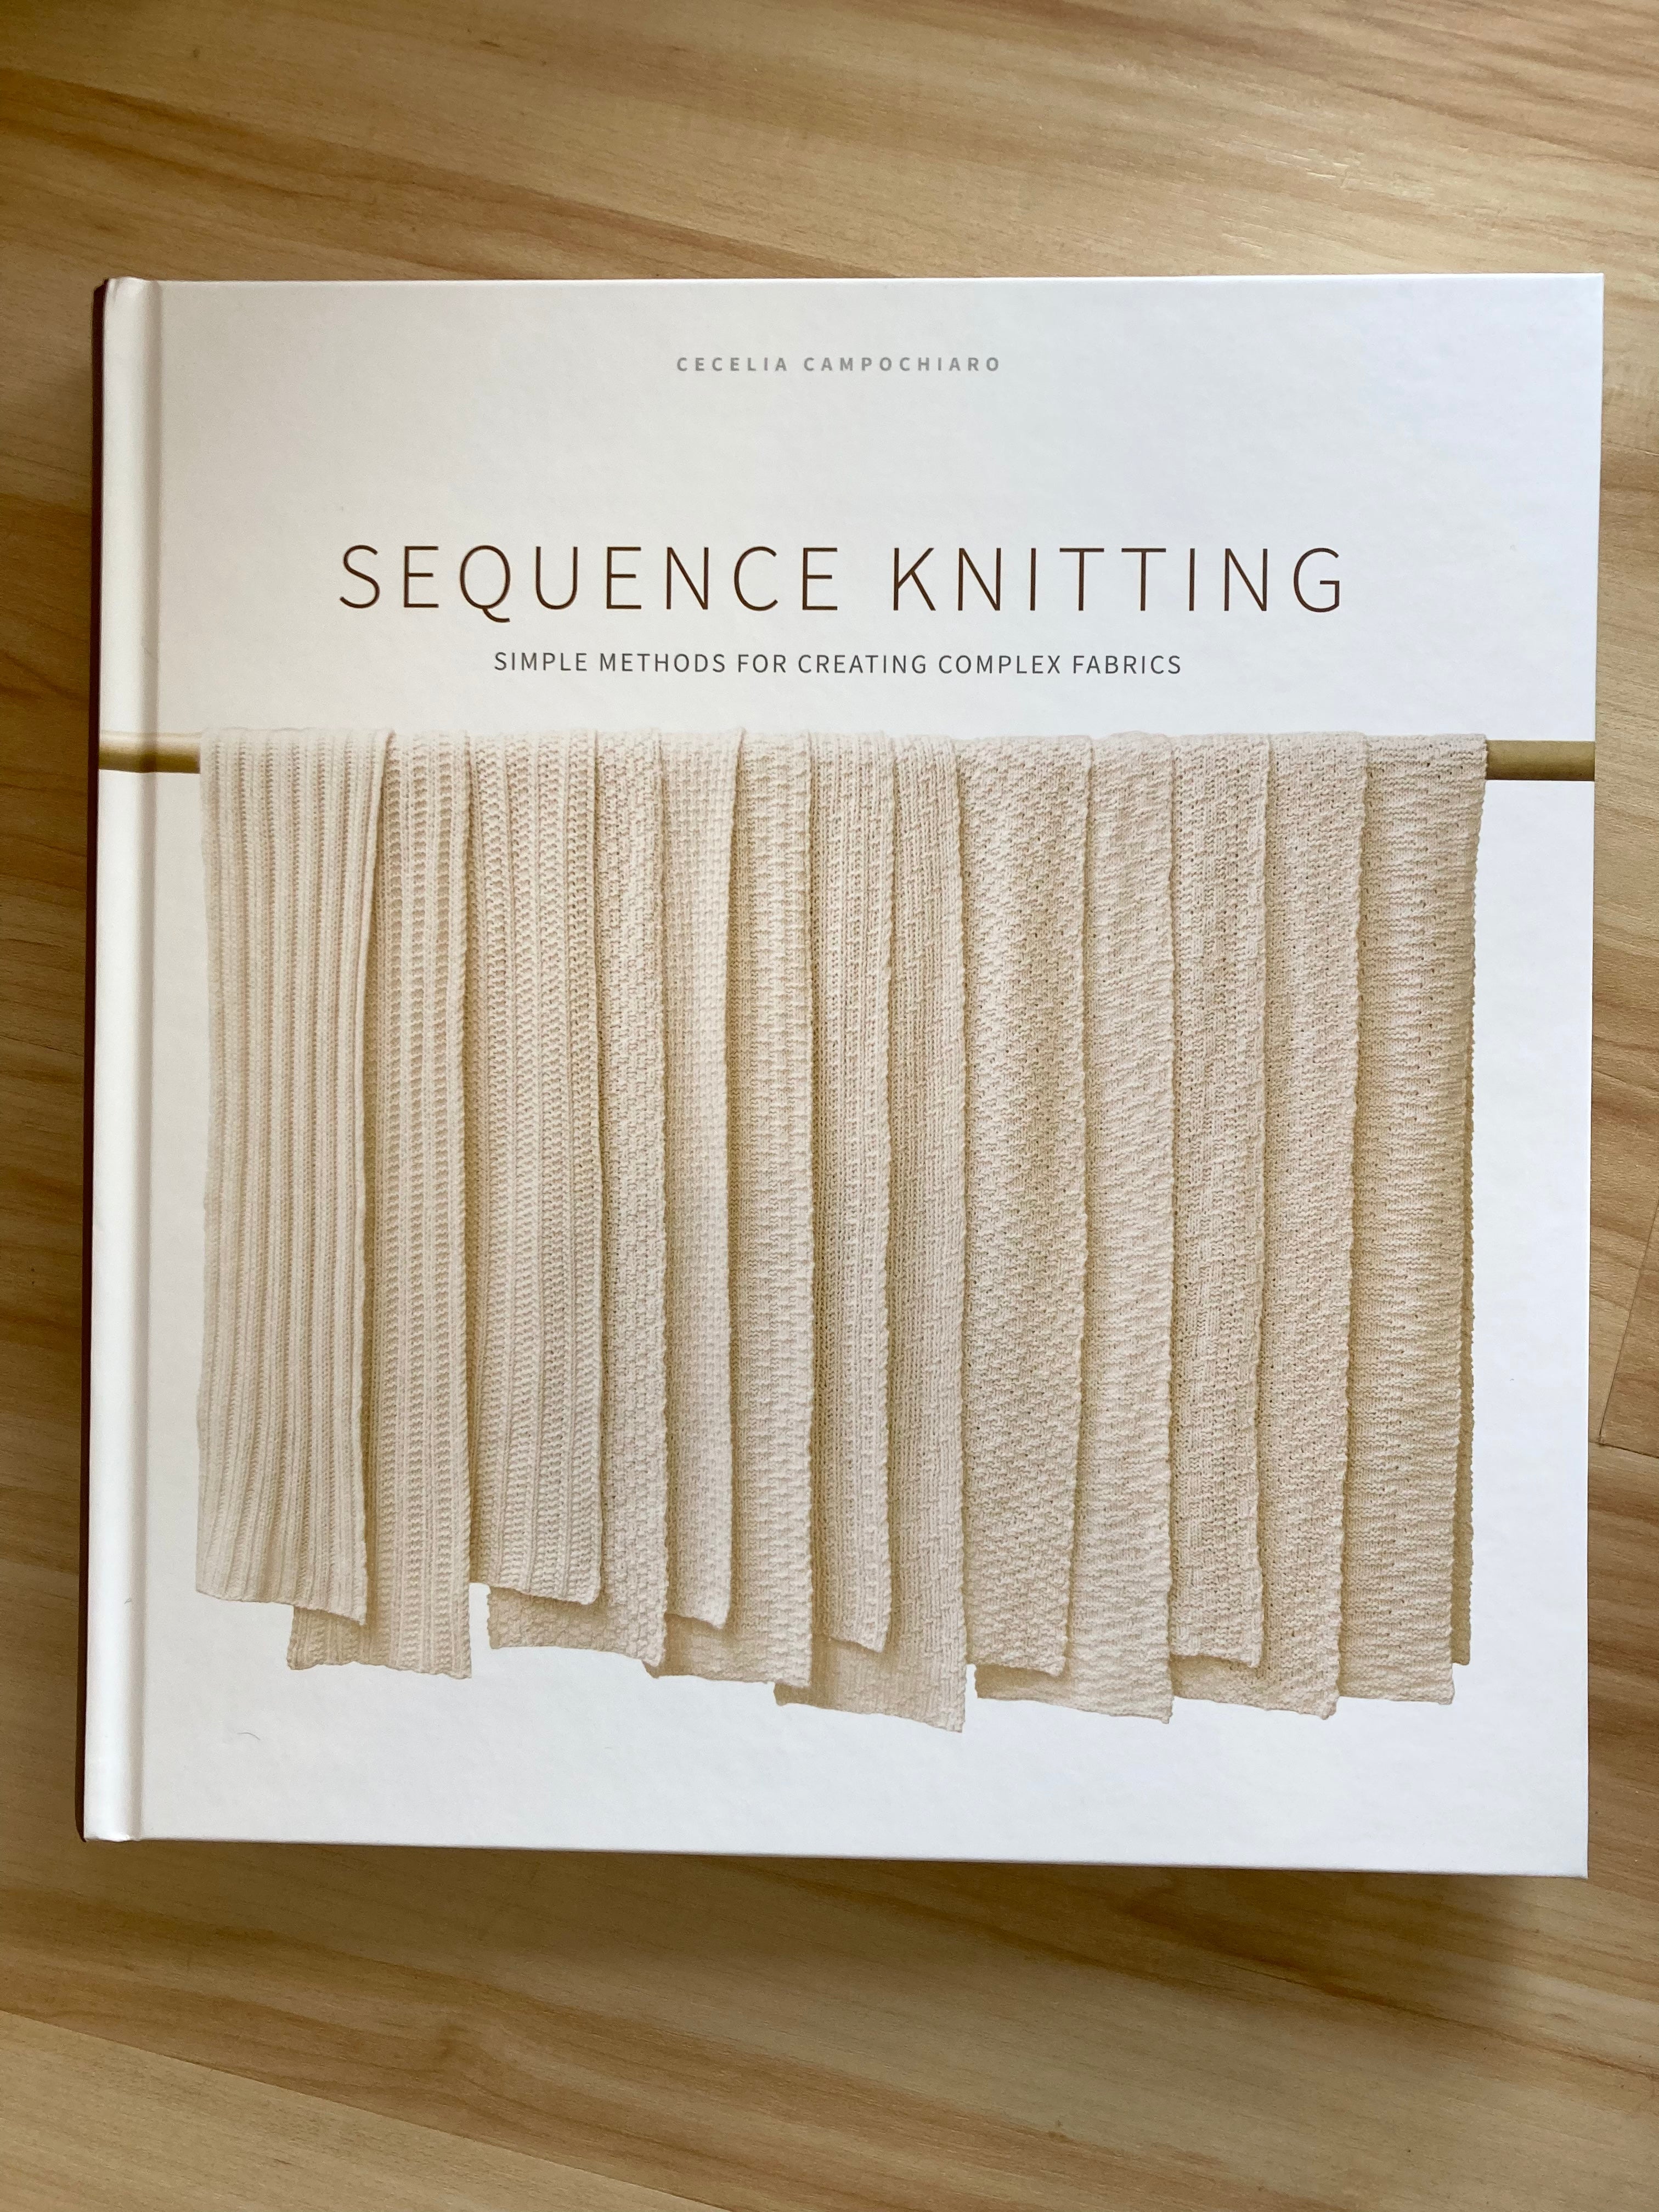 Sequence Knitting book by Cecelia Campochiaro